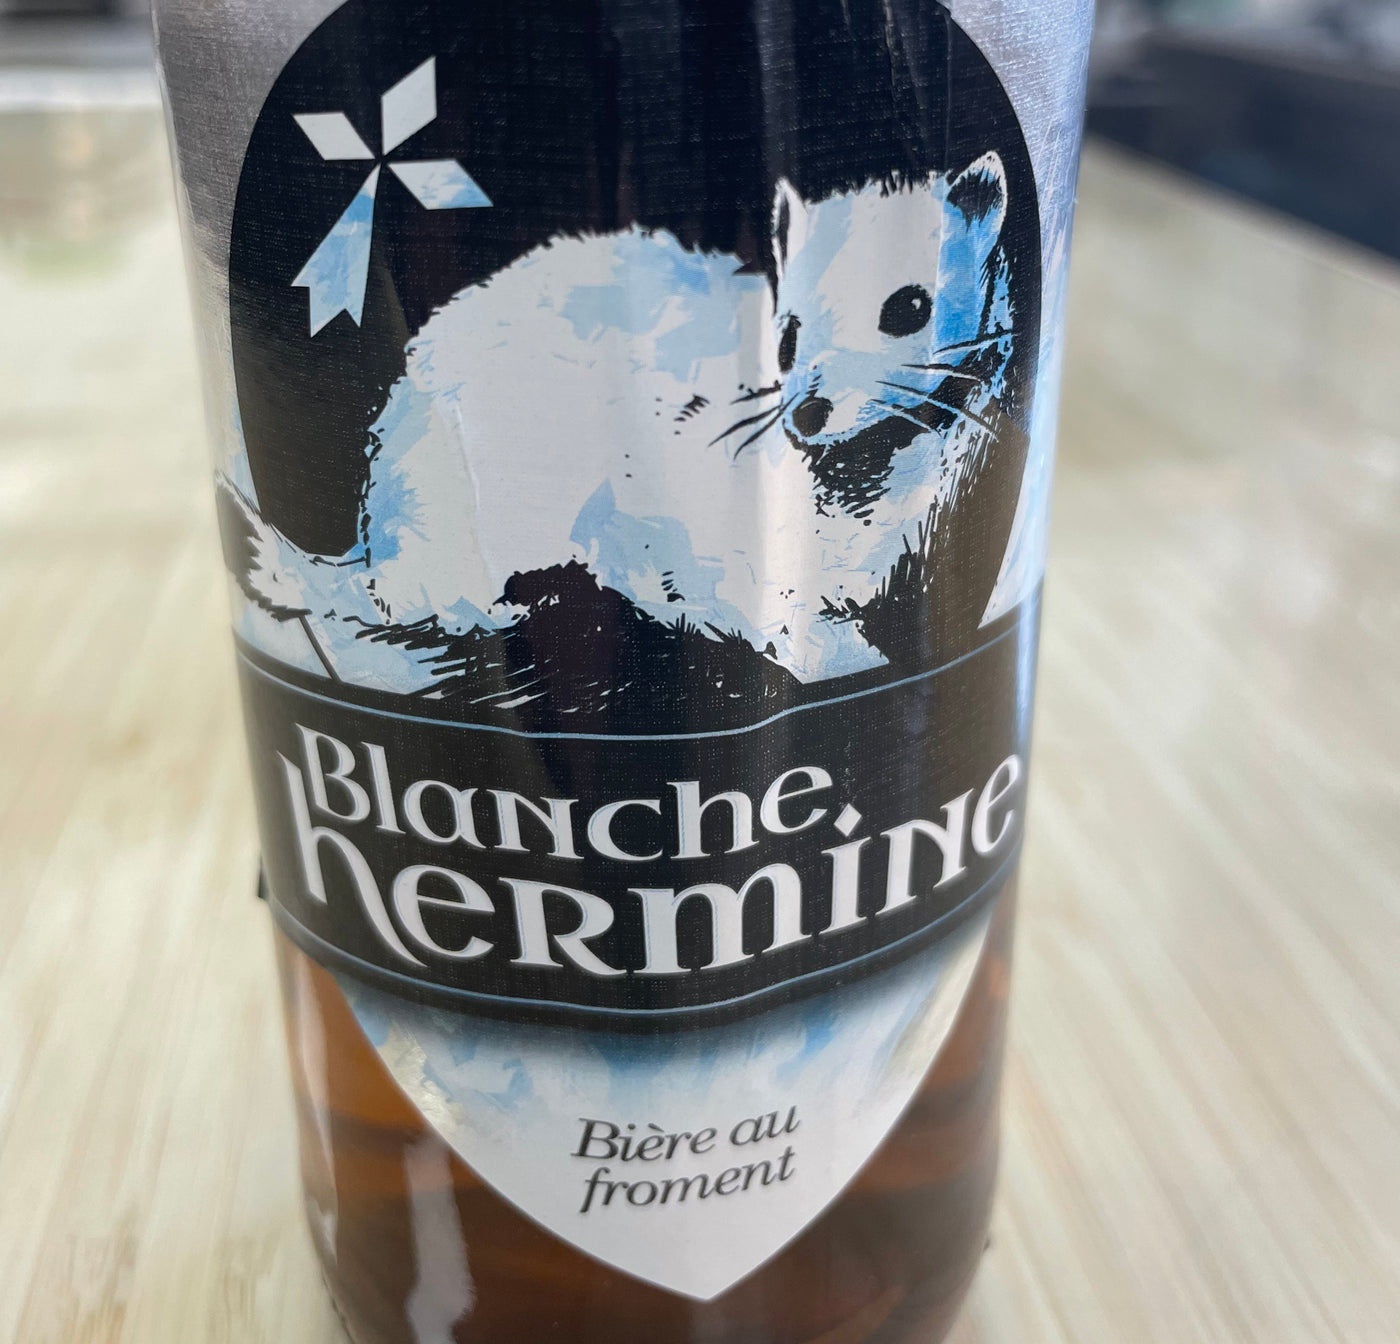 Bière blanche hermine